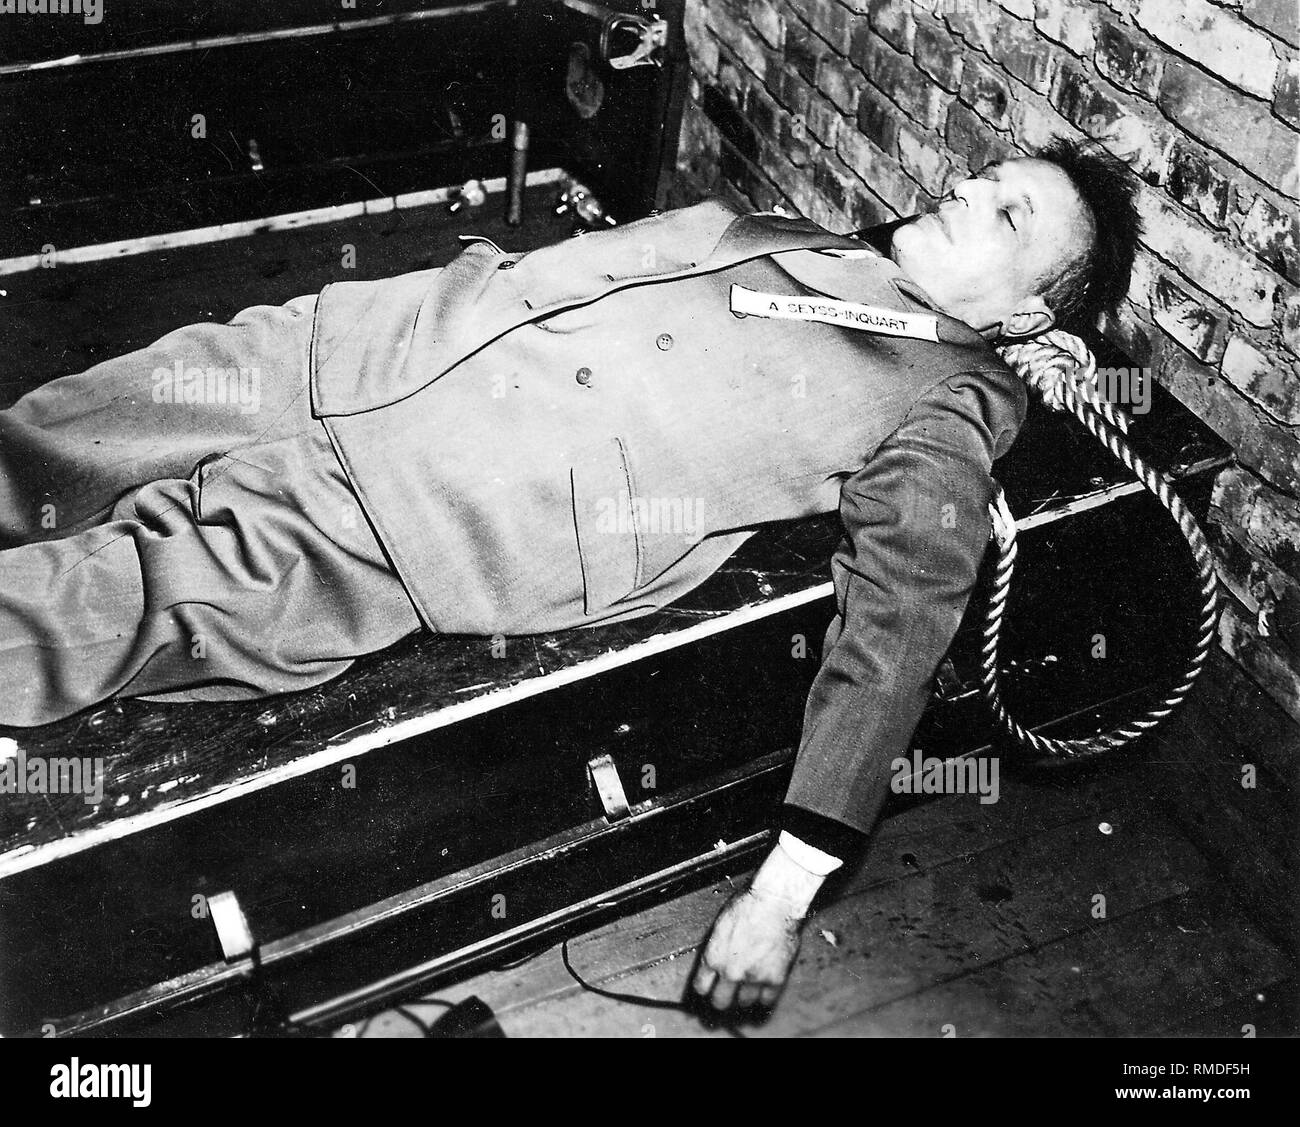 Reichsstatthalter Arthur Seyss-Inquart after his execution by hanging on October 16, 1946 in Nuremberg (Nuremberg Trials). Stock Photo